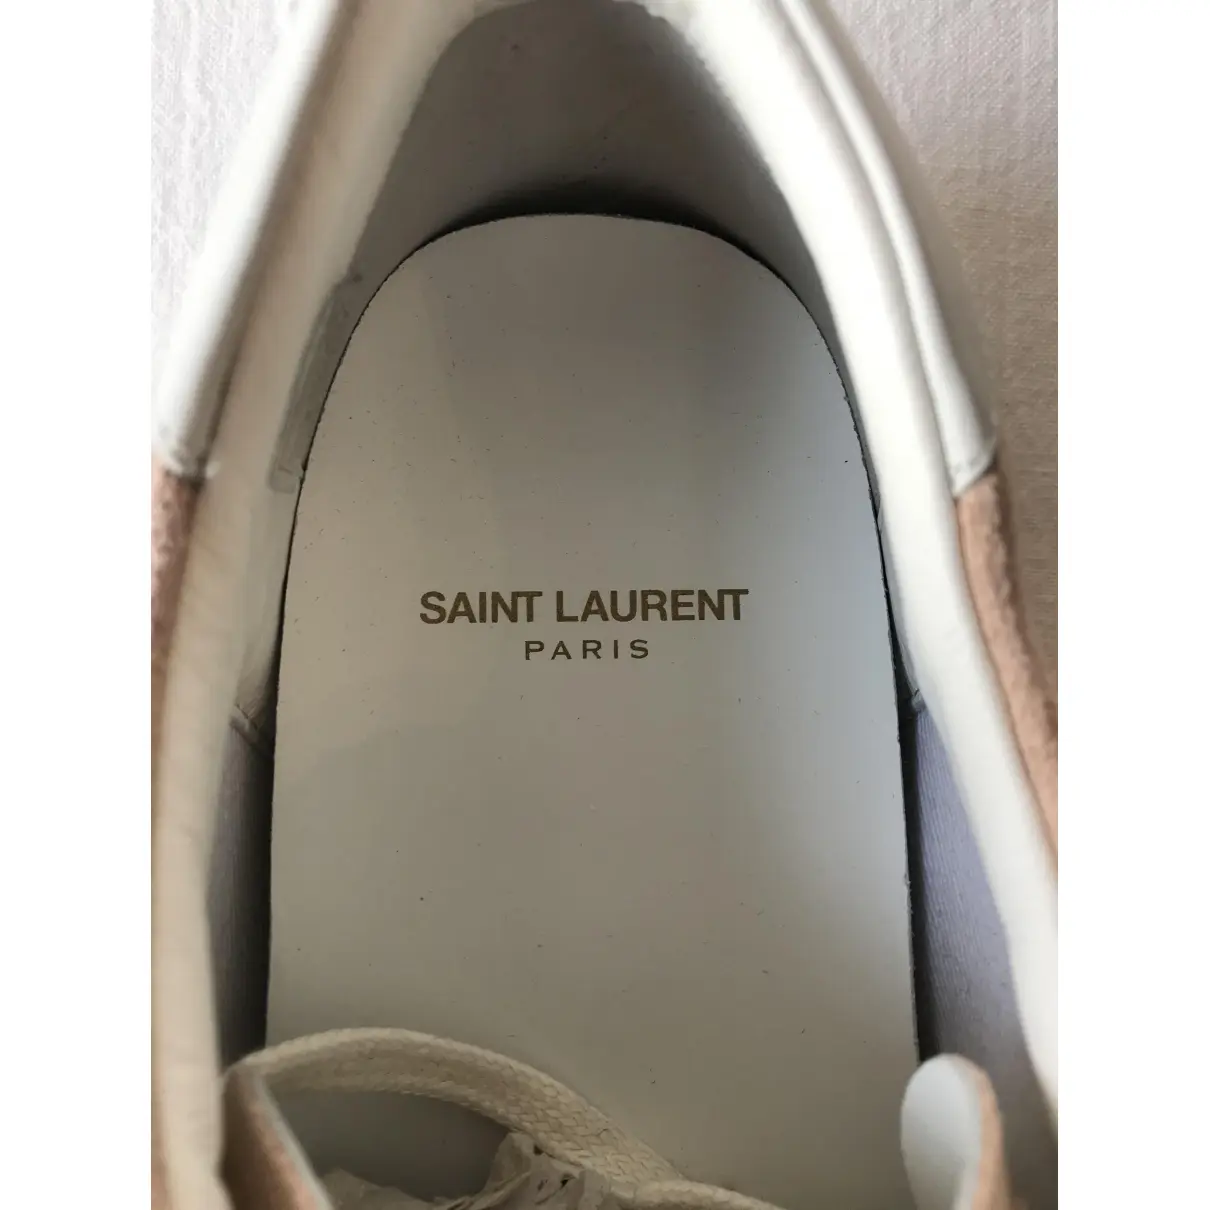 Buy Saint Laurent SL/06 low trainers online